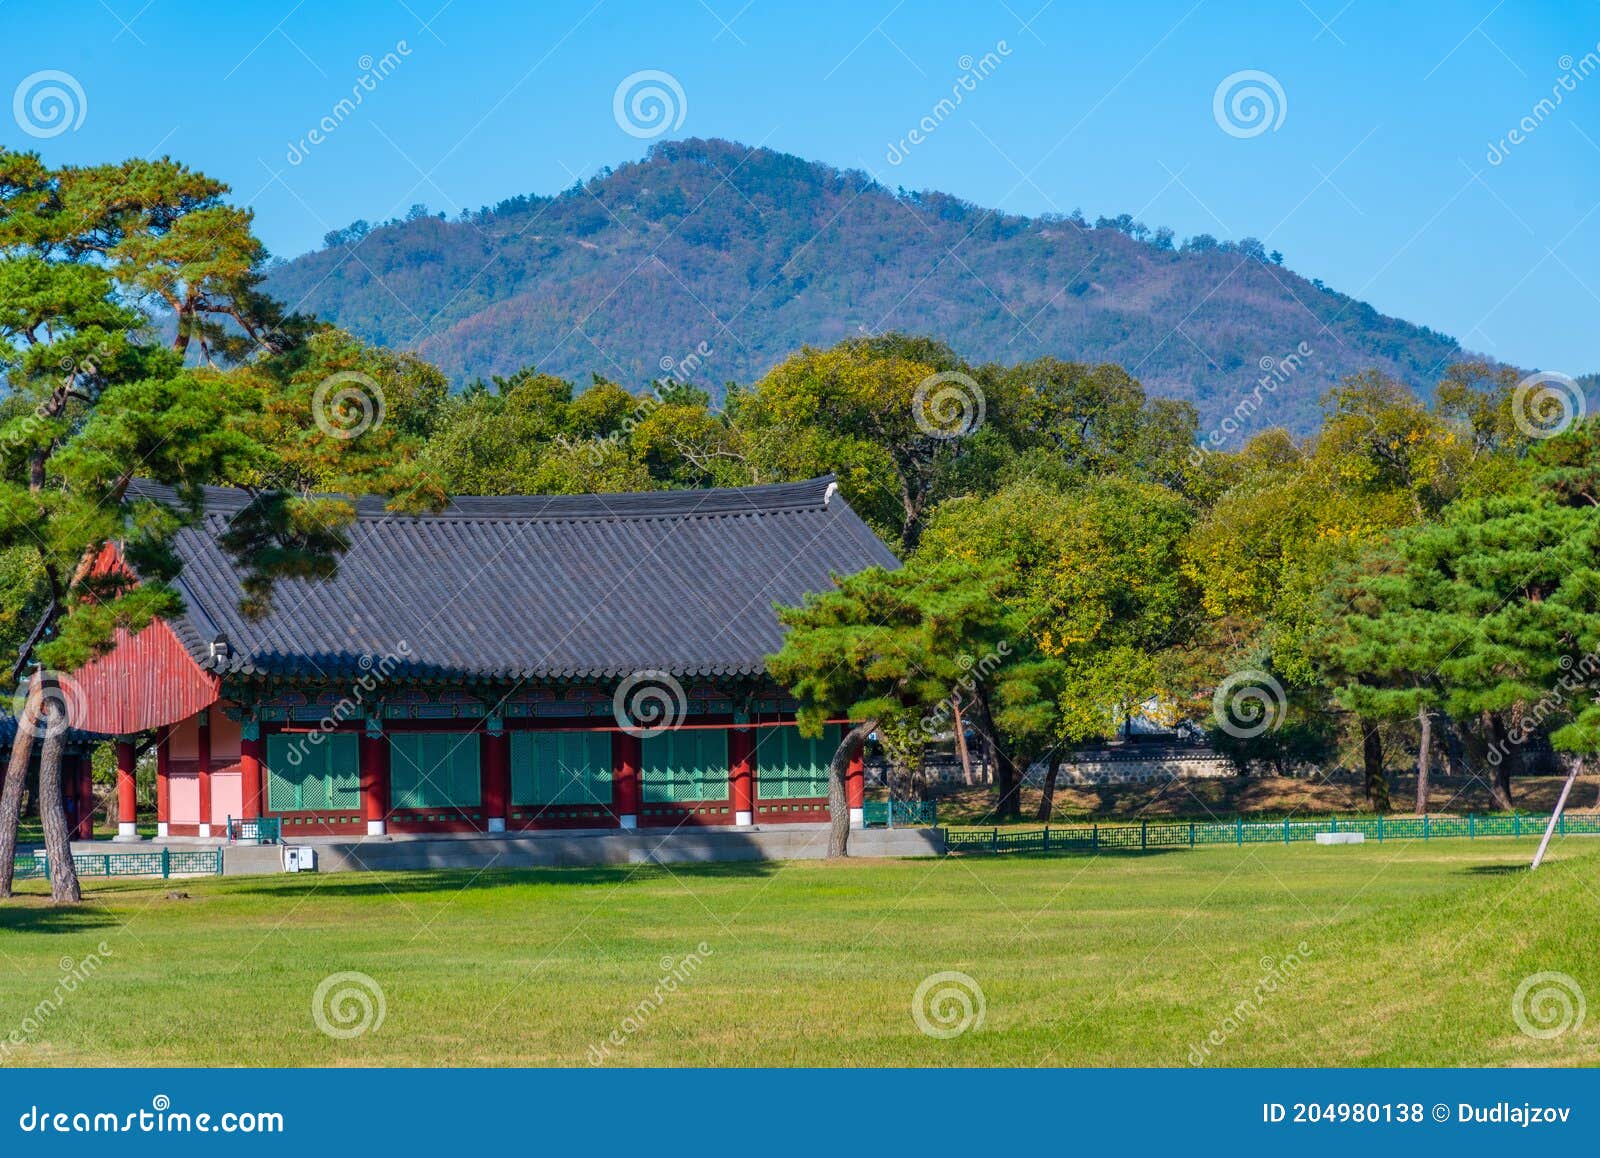 silla oreung royal tombs at gyeongju, republic of korea